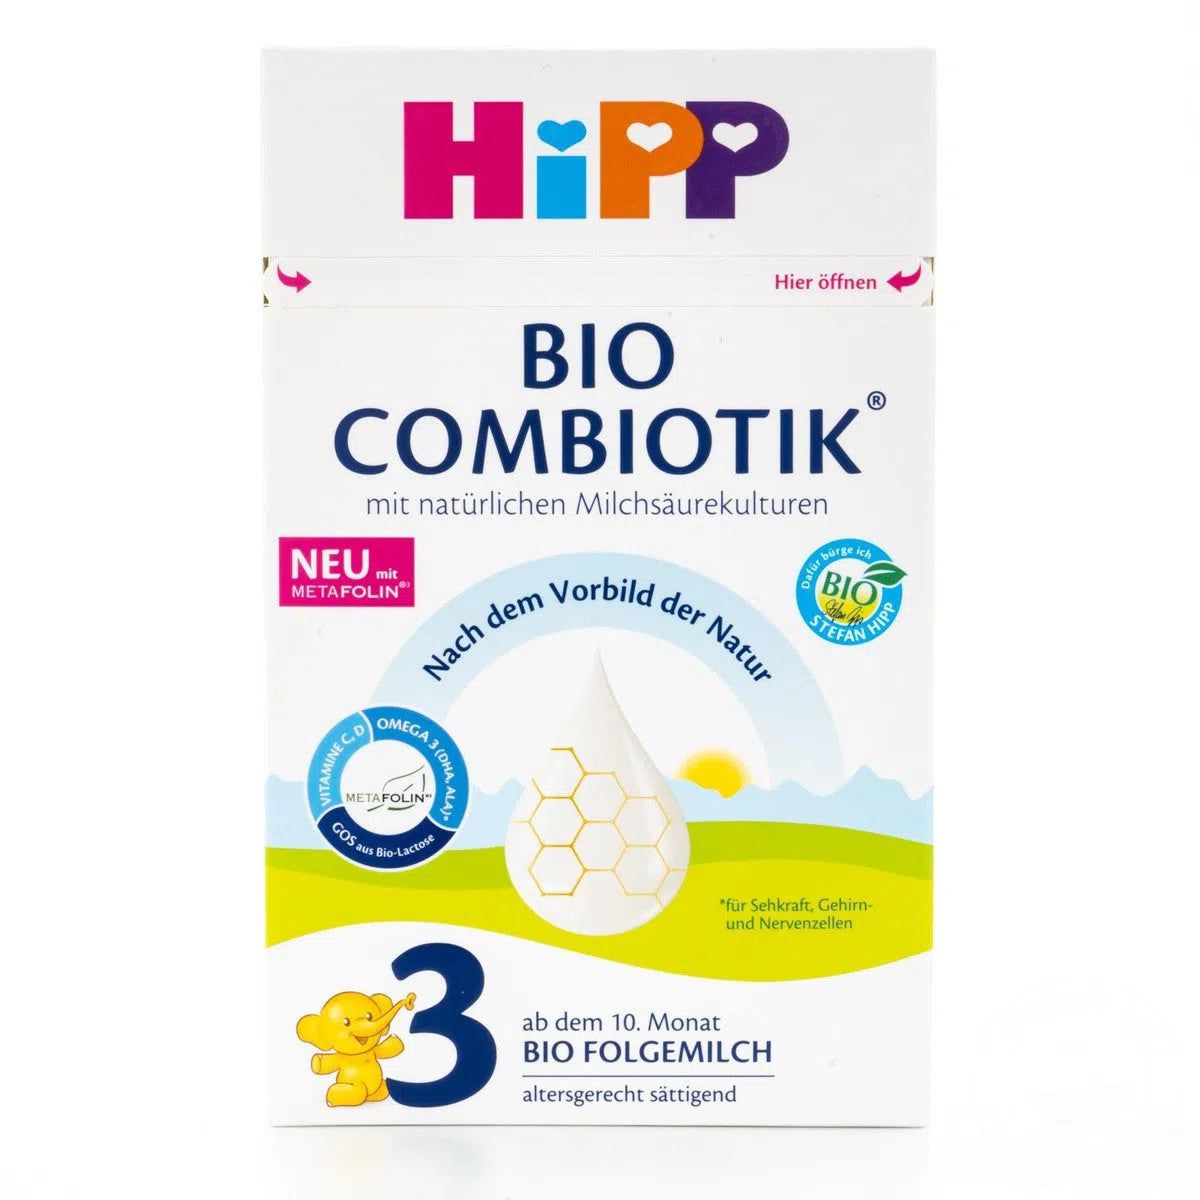 HiPP Stage 3 Combiotic Formula - German Version (600g) - 12 Boxes